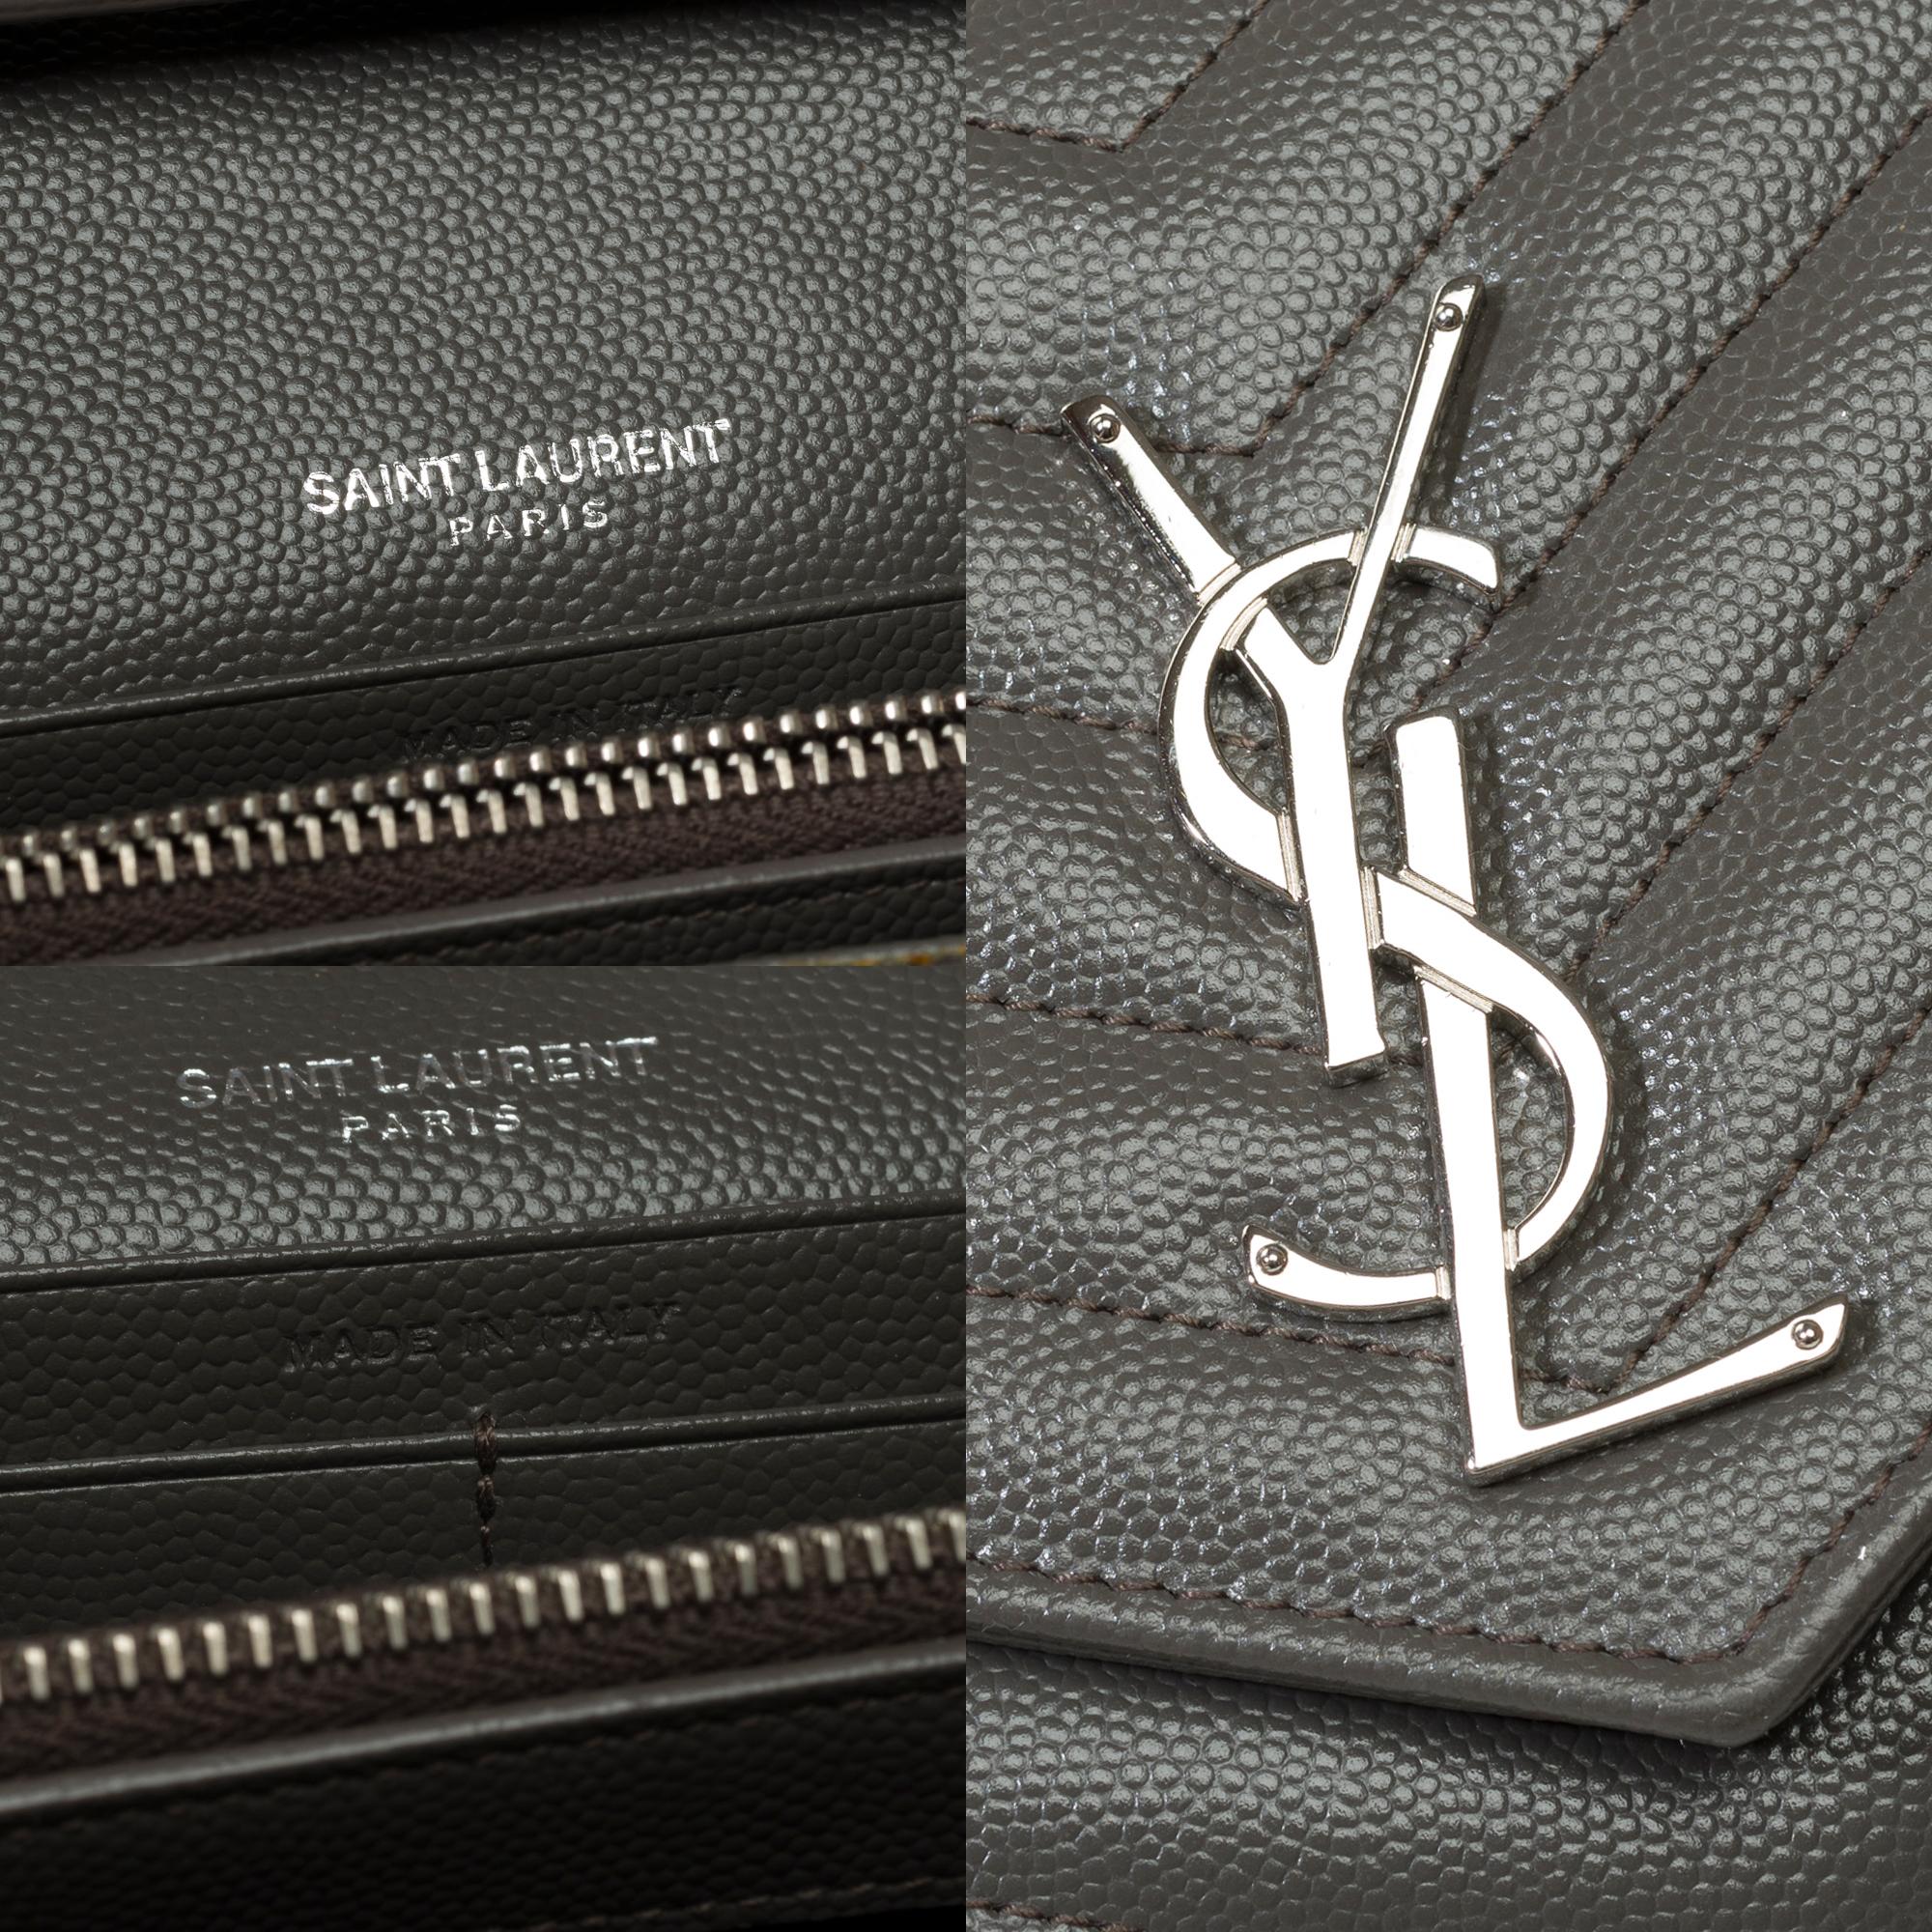 New YSL Pochette Cassandre classic shoulder bag in Grey leather, SHW For Sale 4